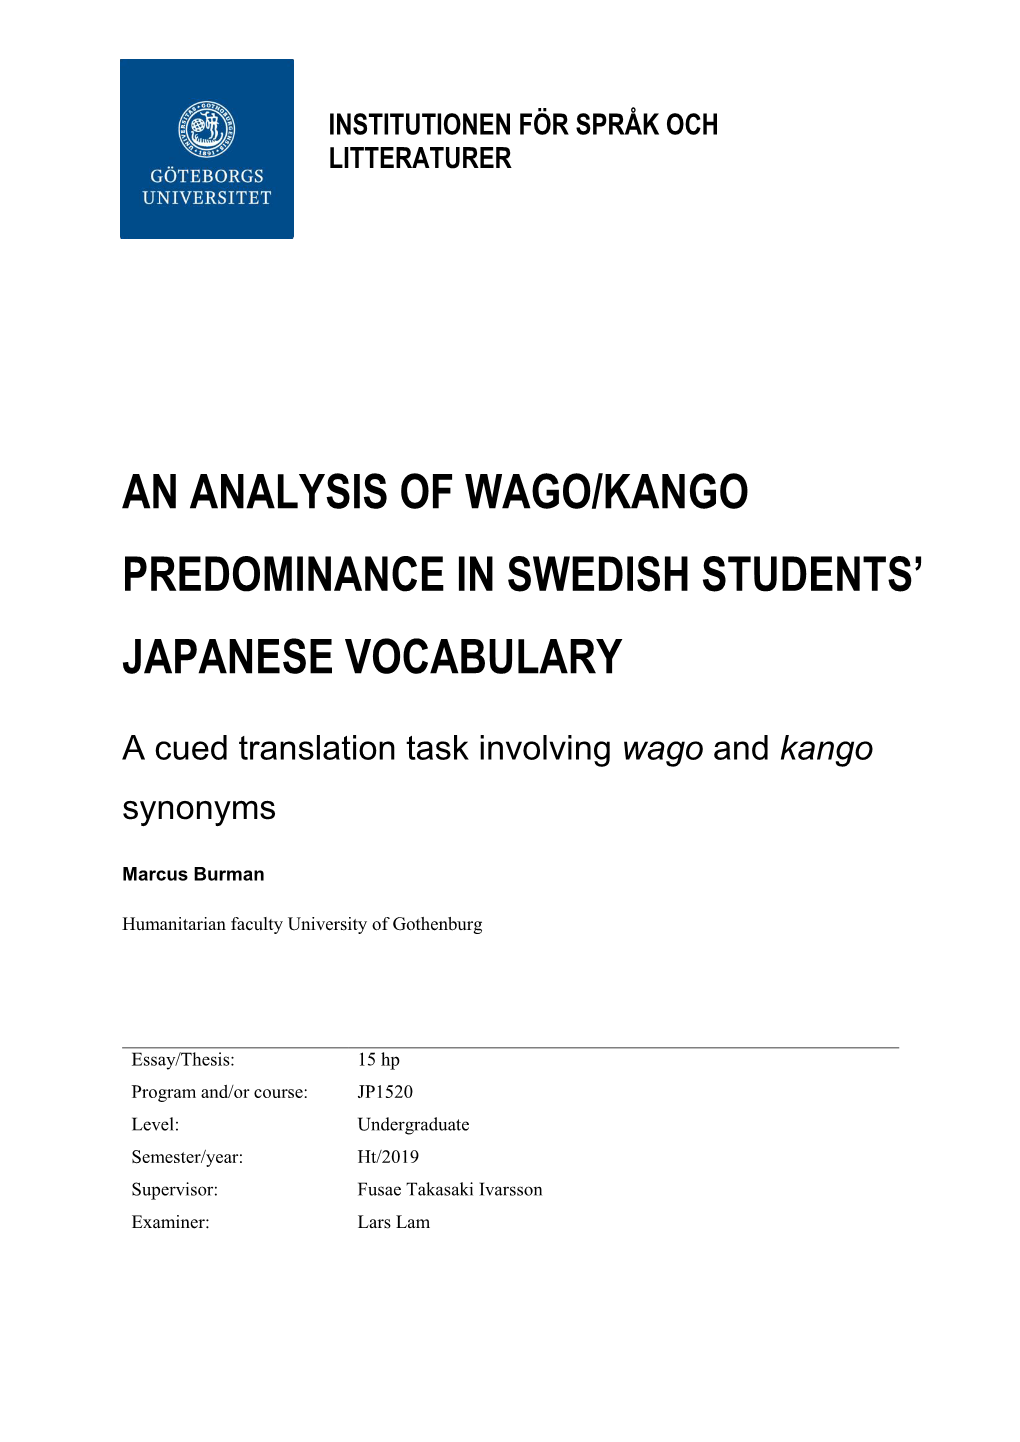 An Analysis of Wago/Kango Predominance in Swedish Students’ Japanese Vocabulary